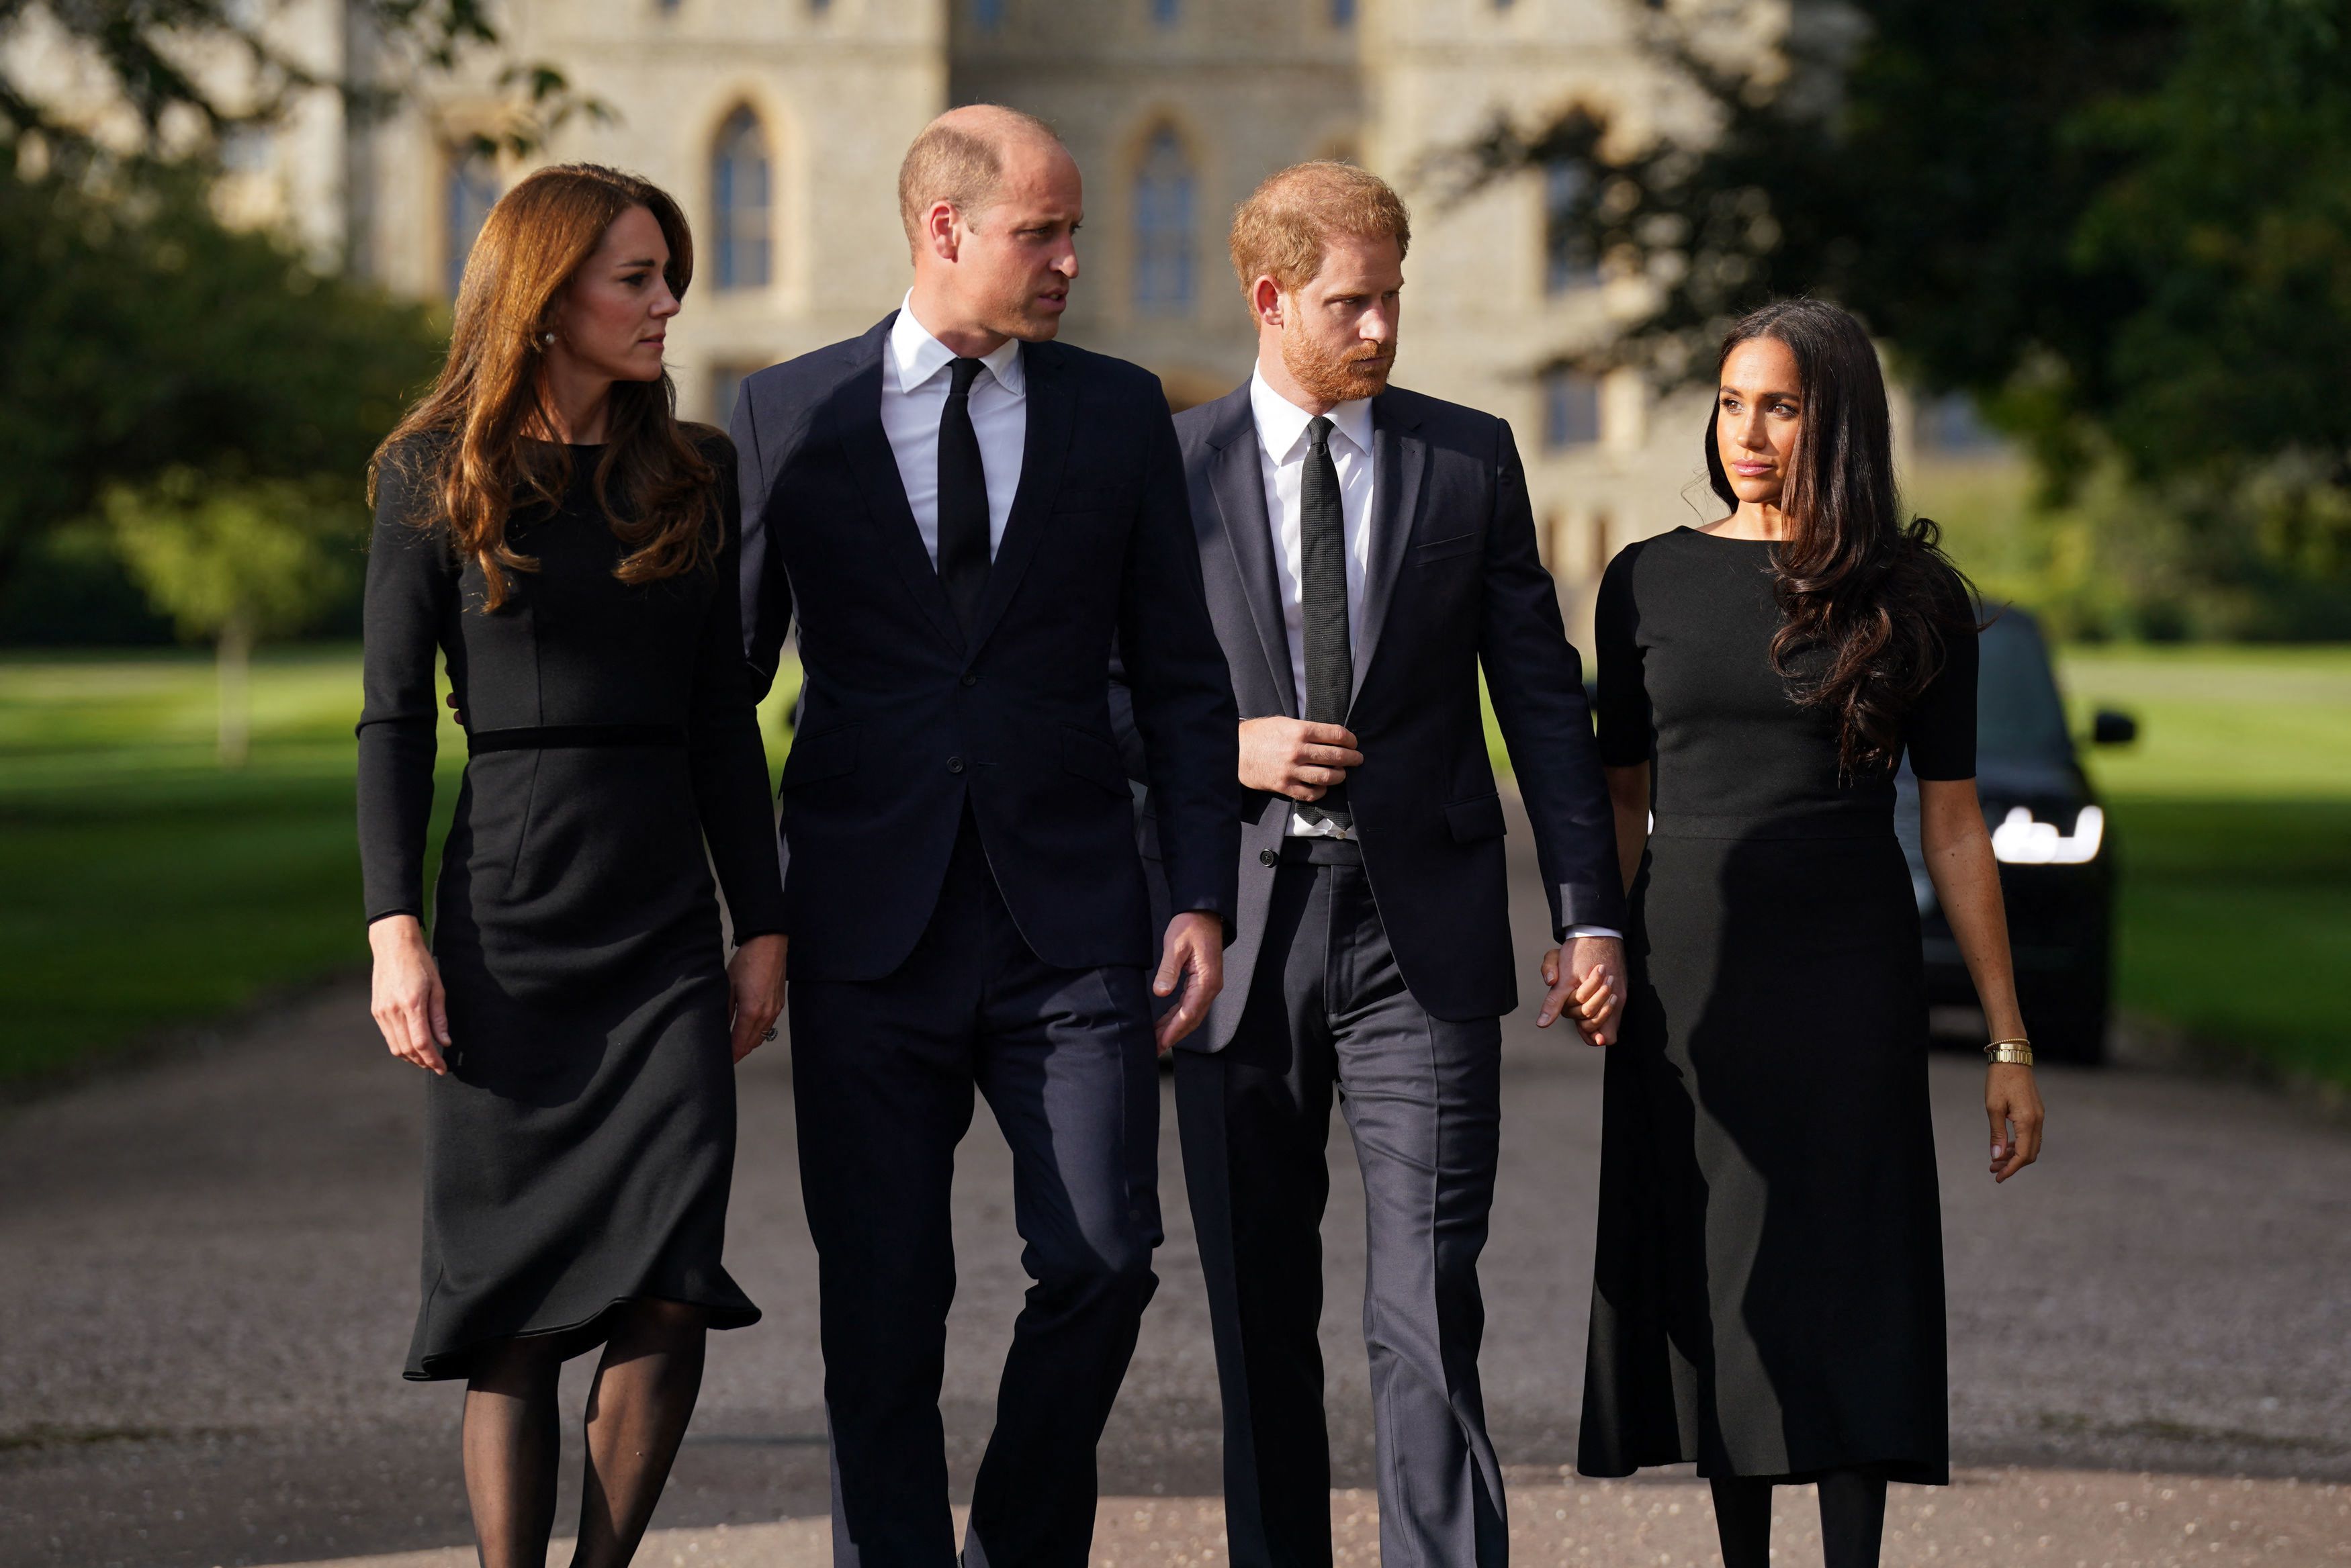 El lleig lletgíssim de Kate Middleton a Meghan Markle al funeral d'Elisabet II